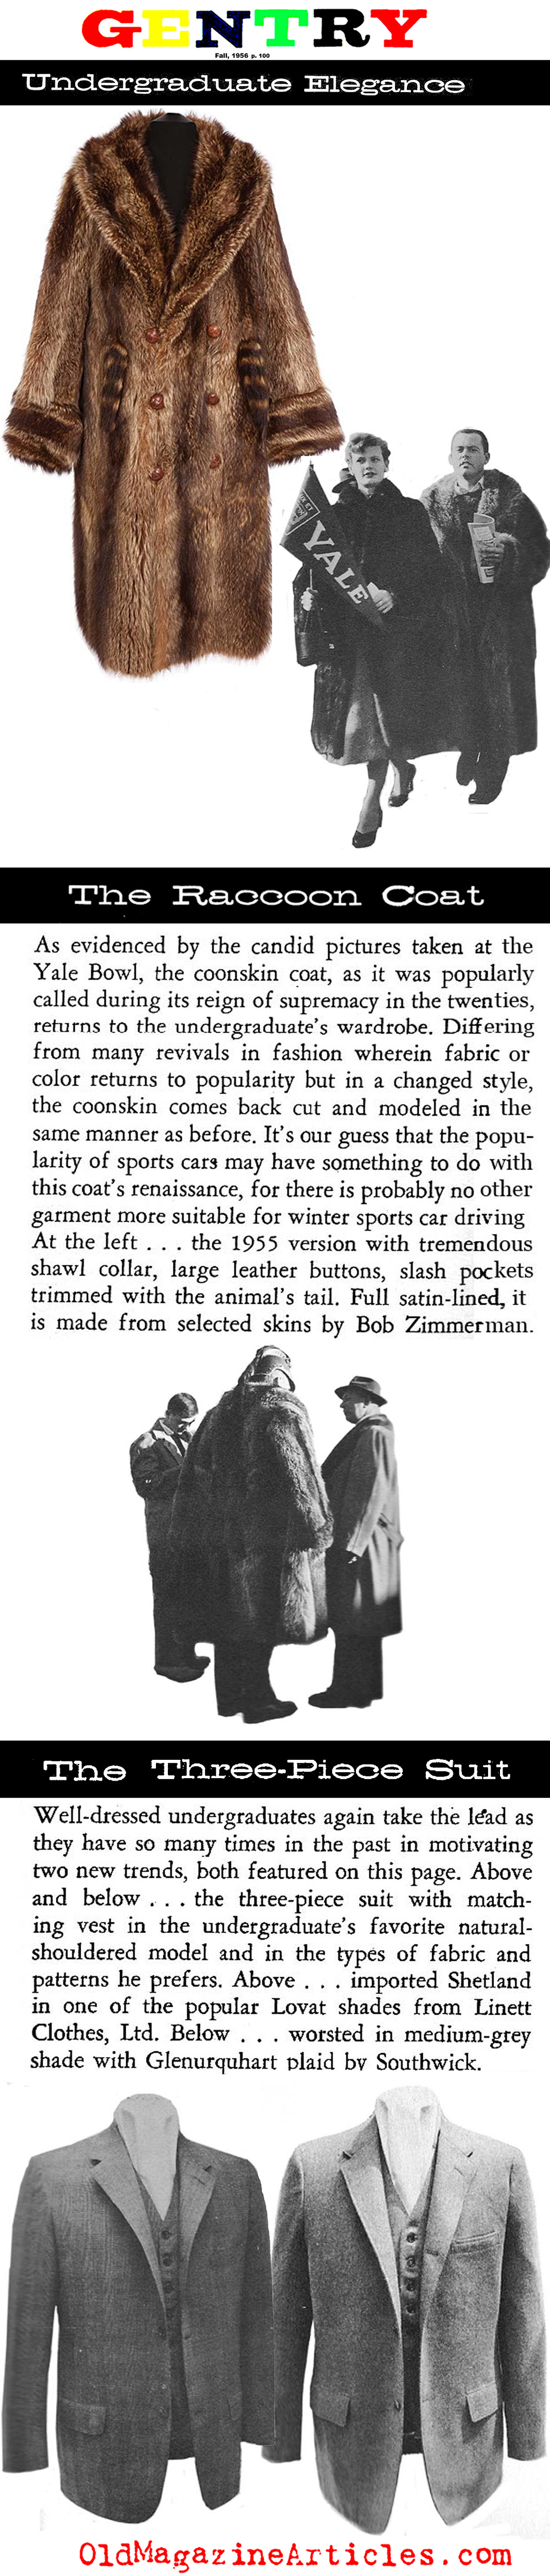  THE RETURN OF THE RACCOON COAT (Gentry Magazine, 1956)